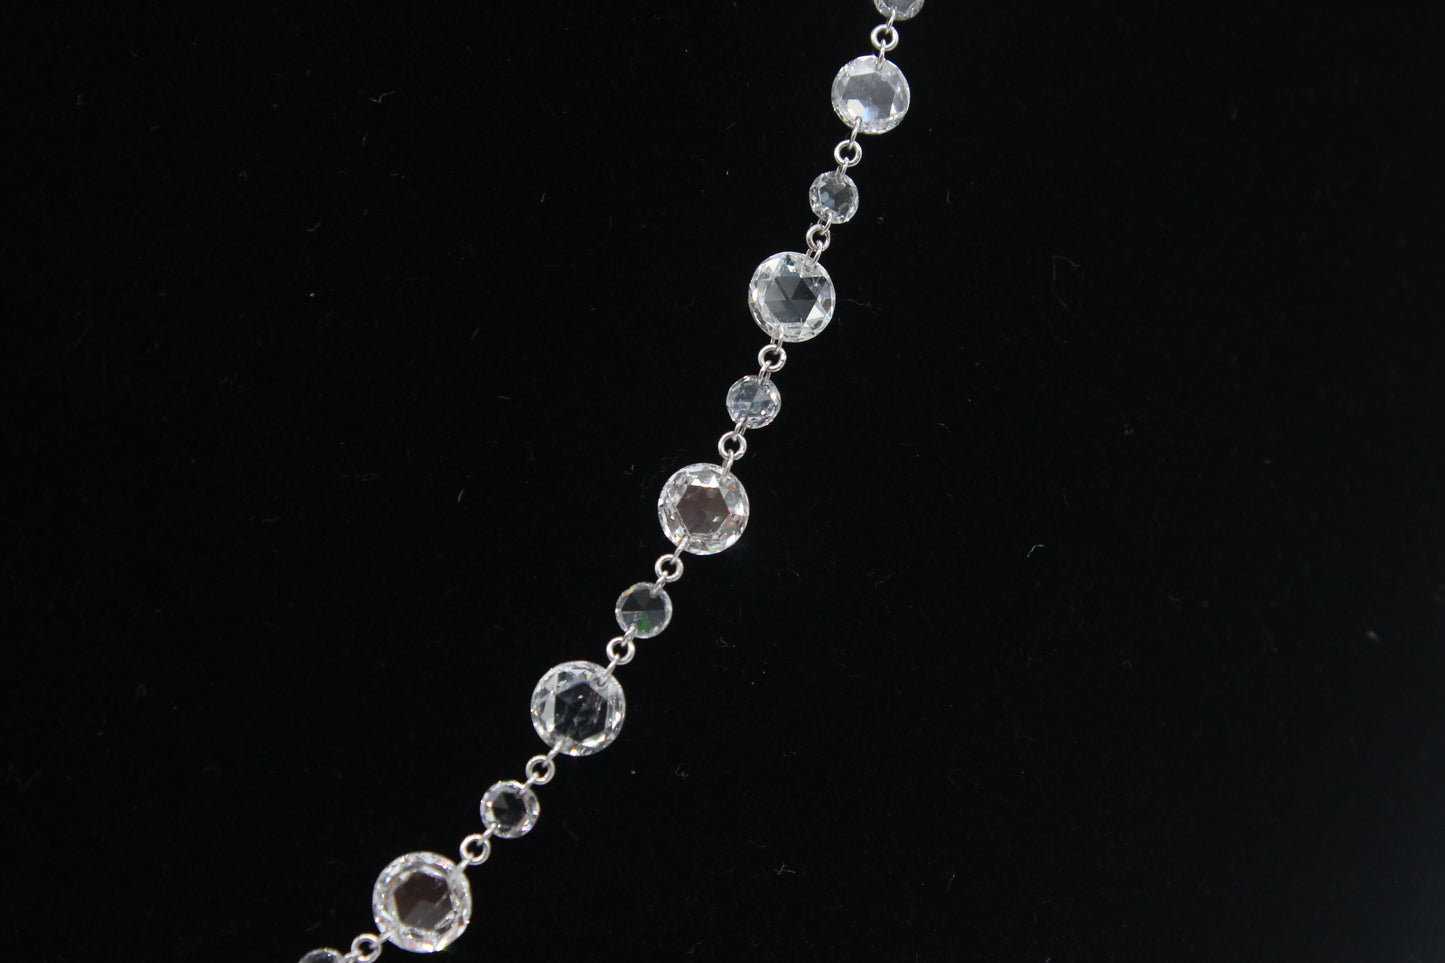 Diamond Rosecut Alternating Choker Necklace